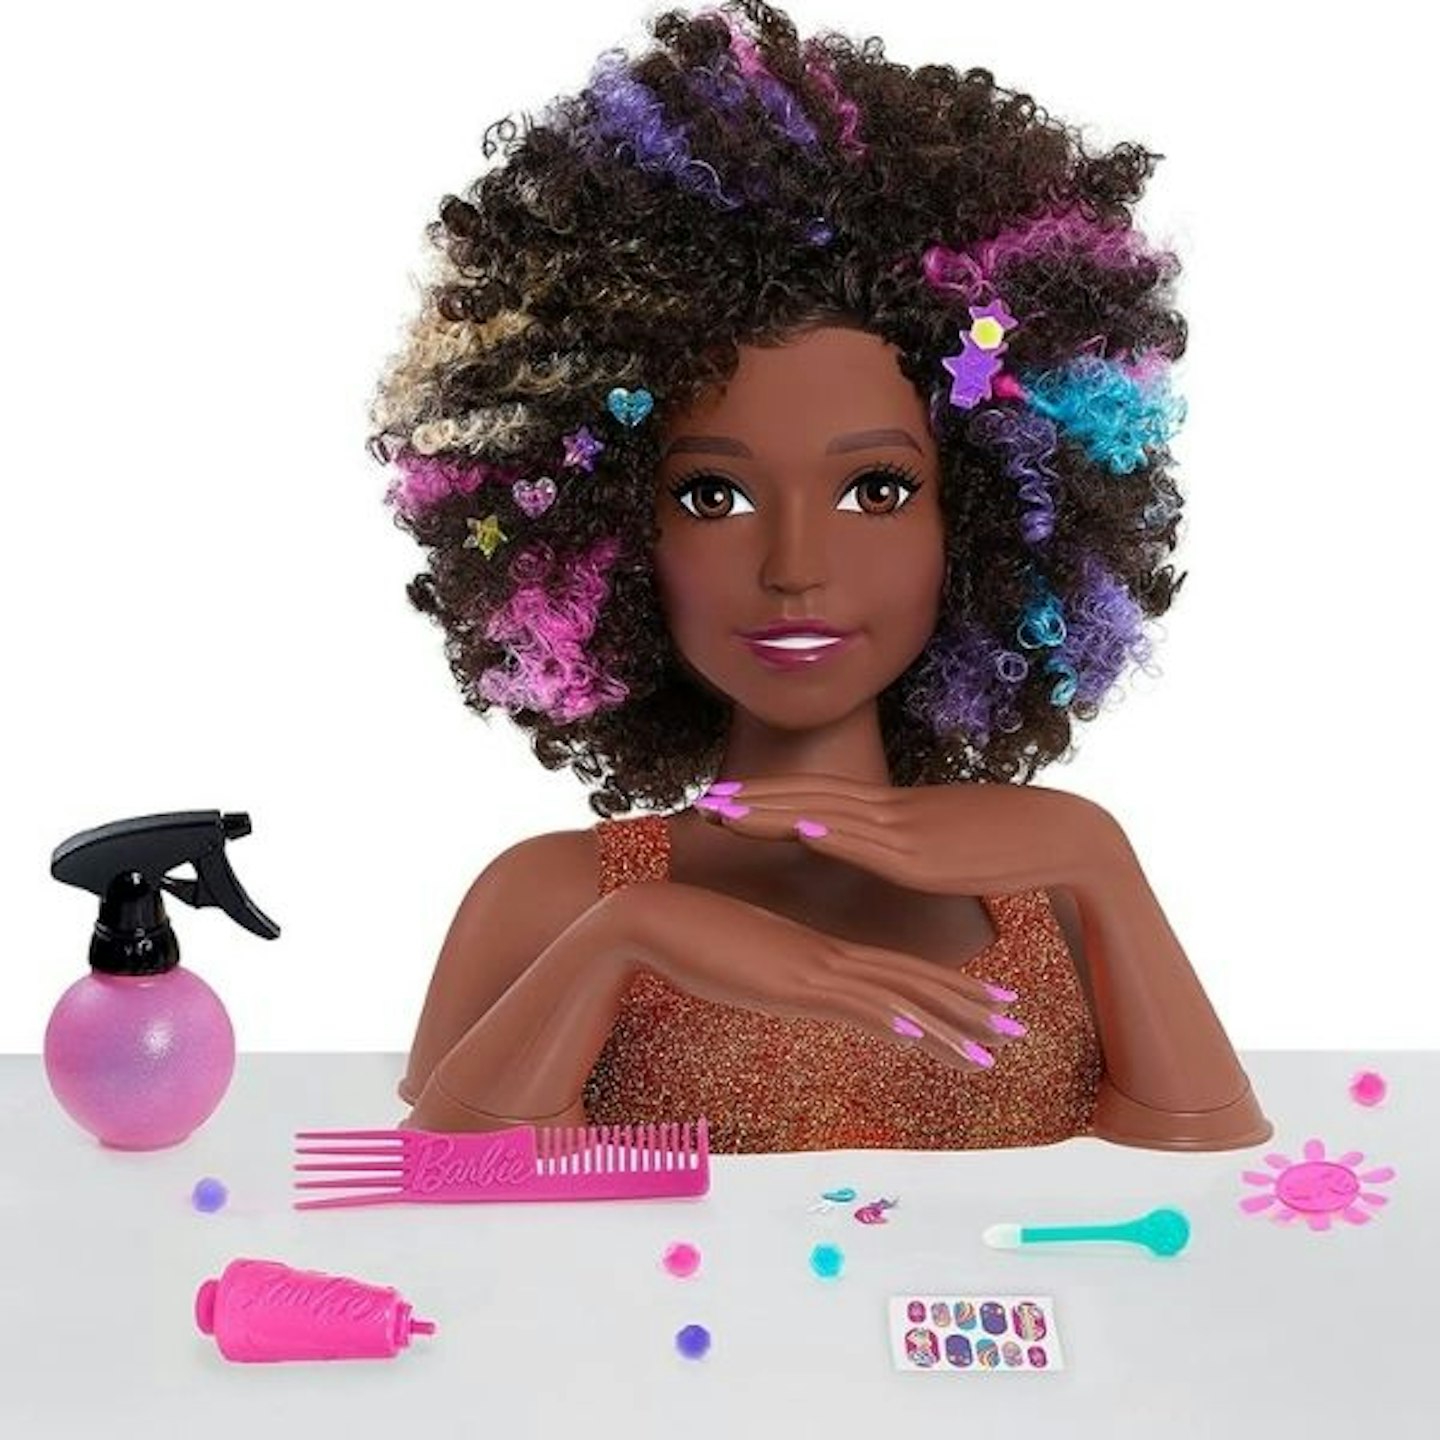 popular makeup doll head for kids